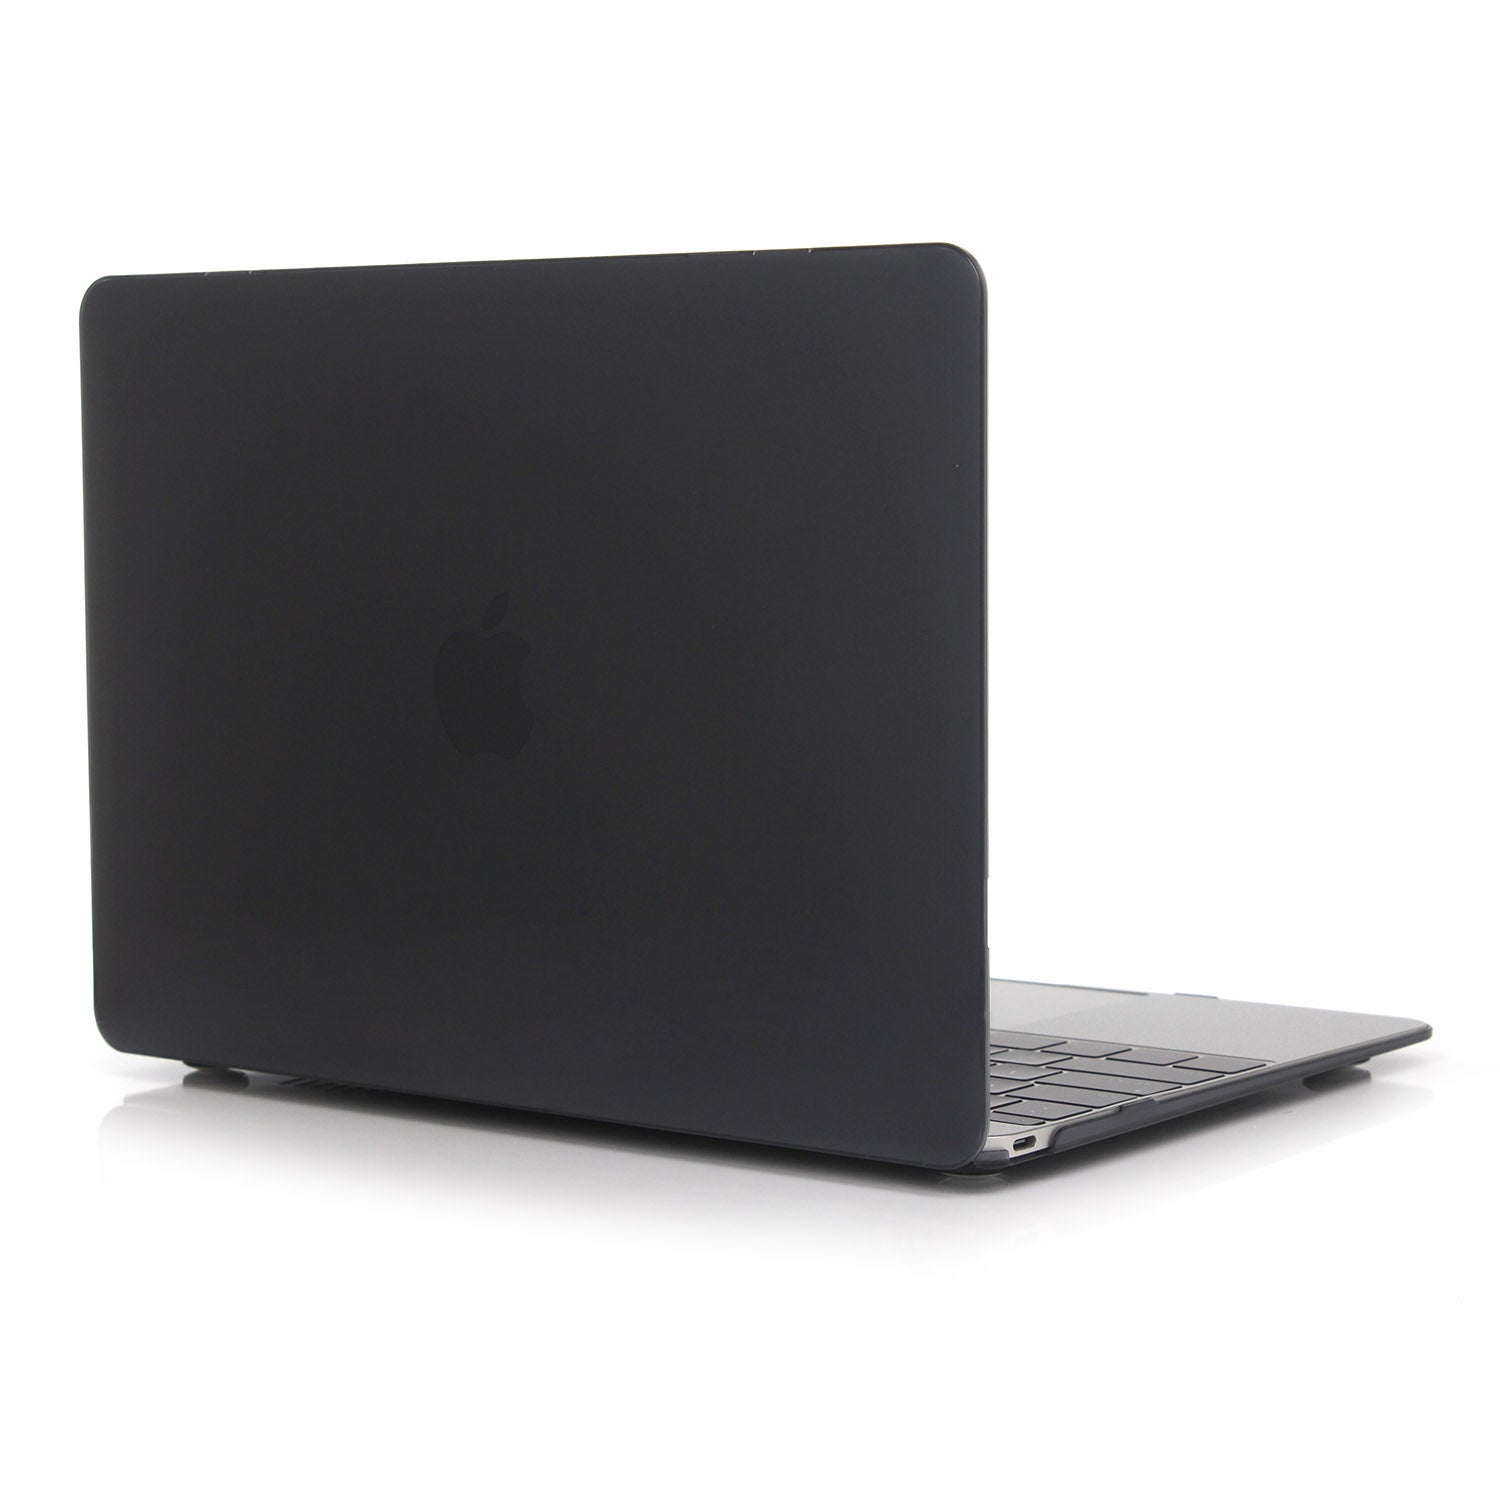 Catzon Crystal Case New laptop Case For Apple MacBook Air Pro Retina 11 12 13 15 MacBook 15.4 13.3 inches - Black